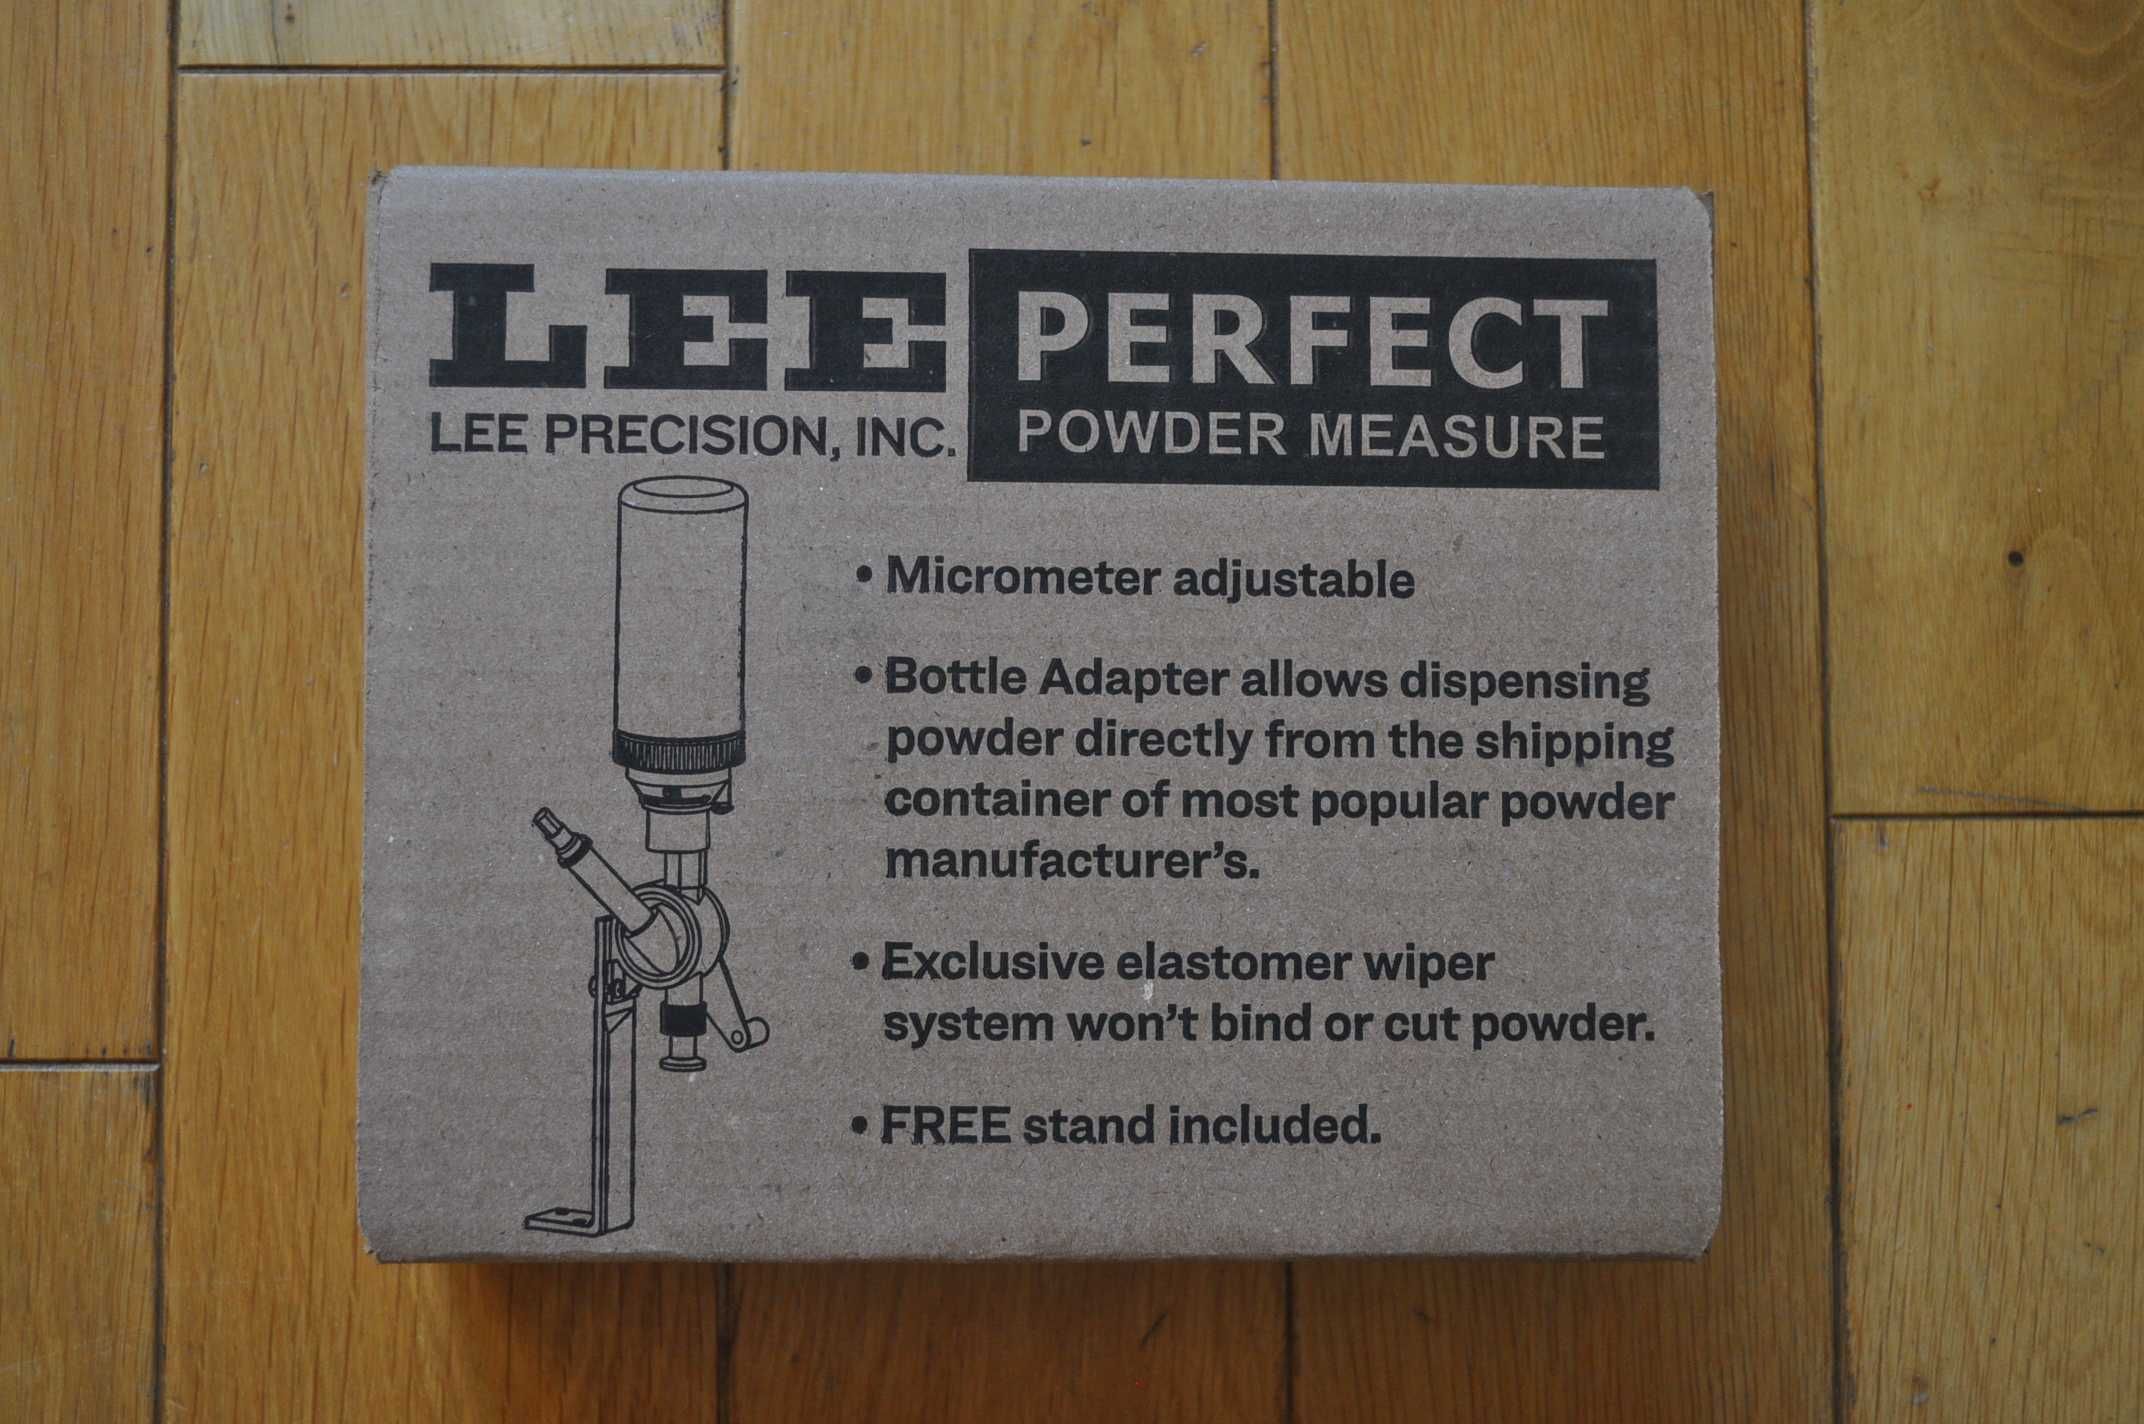 Lee dozownik prochu Perfect Powder Measure